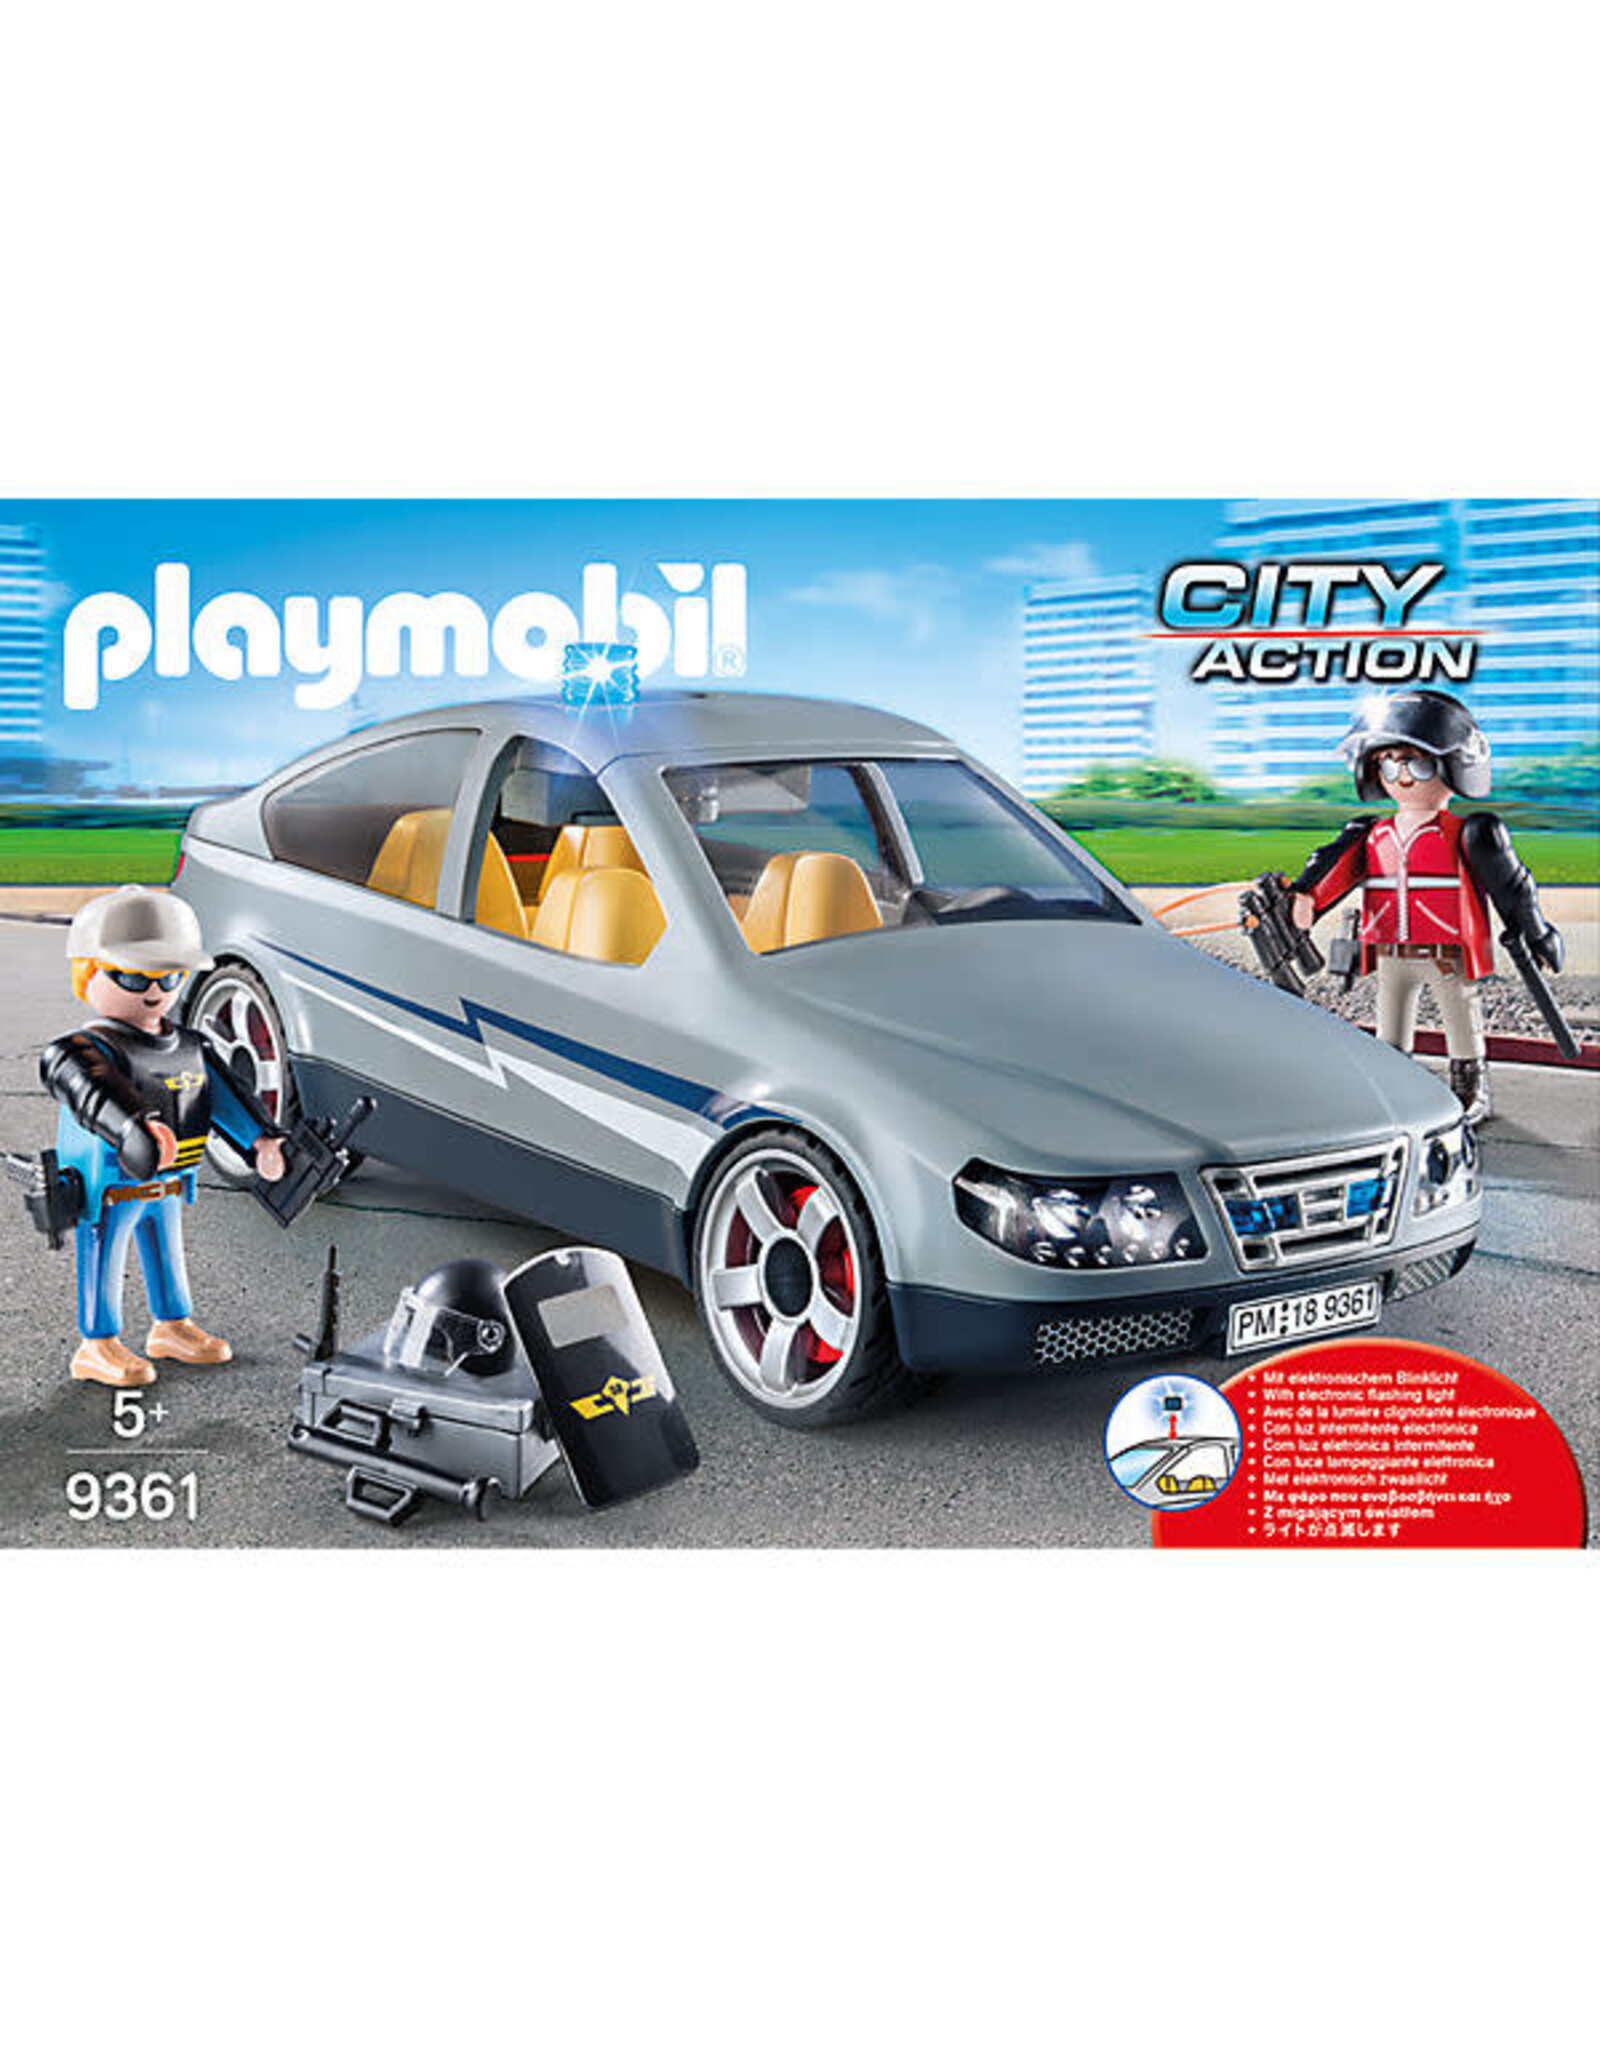 Playmobil Playmobil City Action 9361 Sie Anonieme Wagen